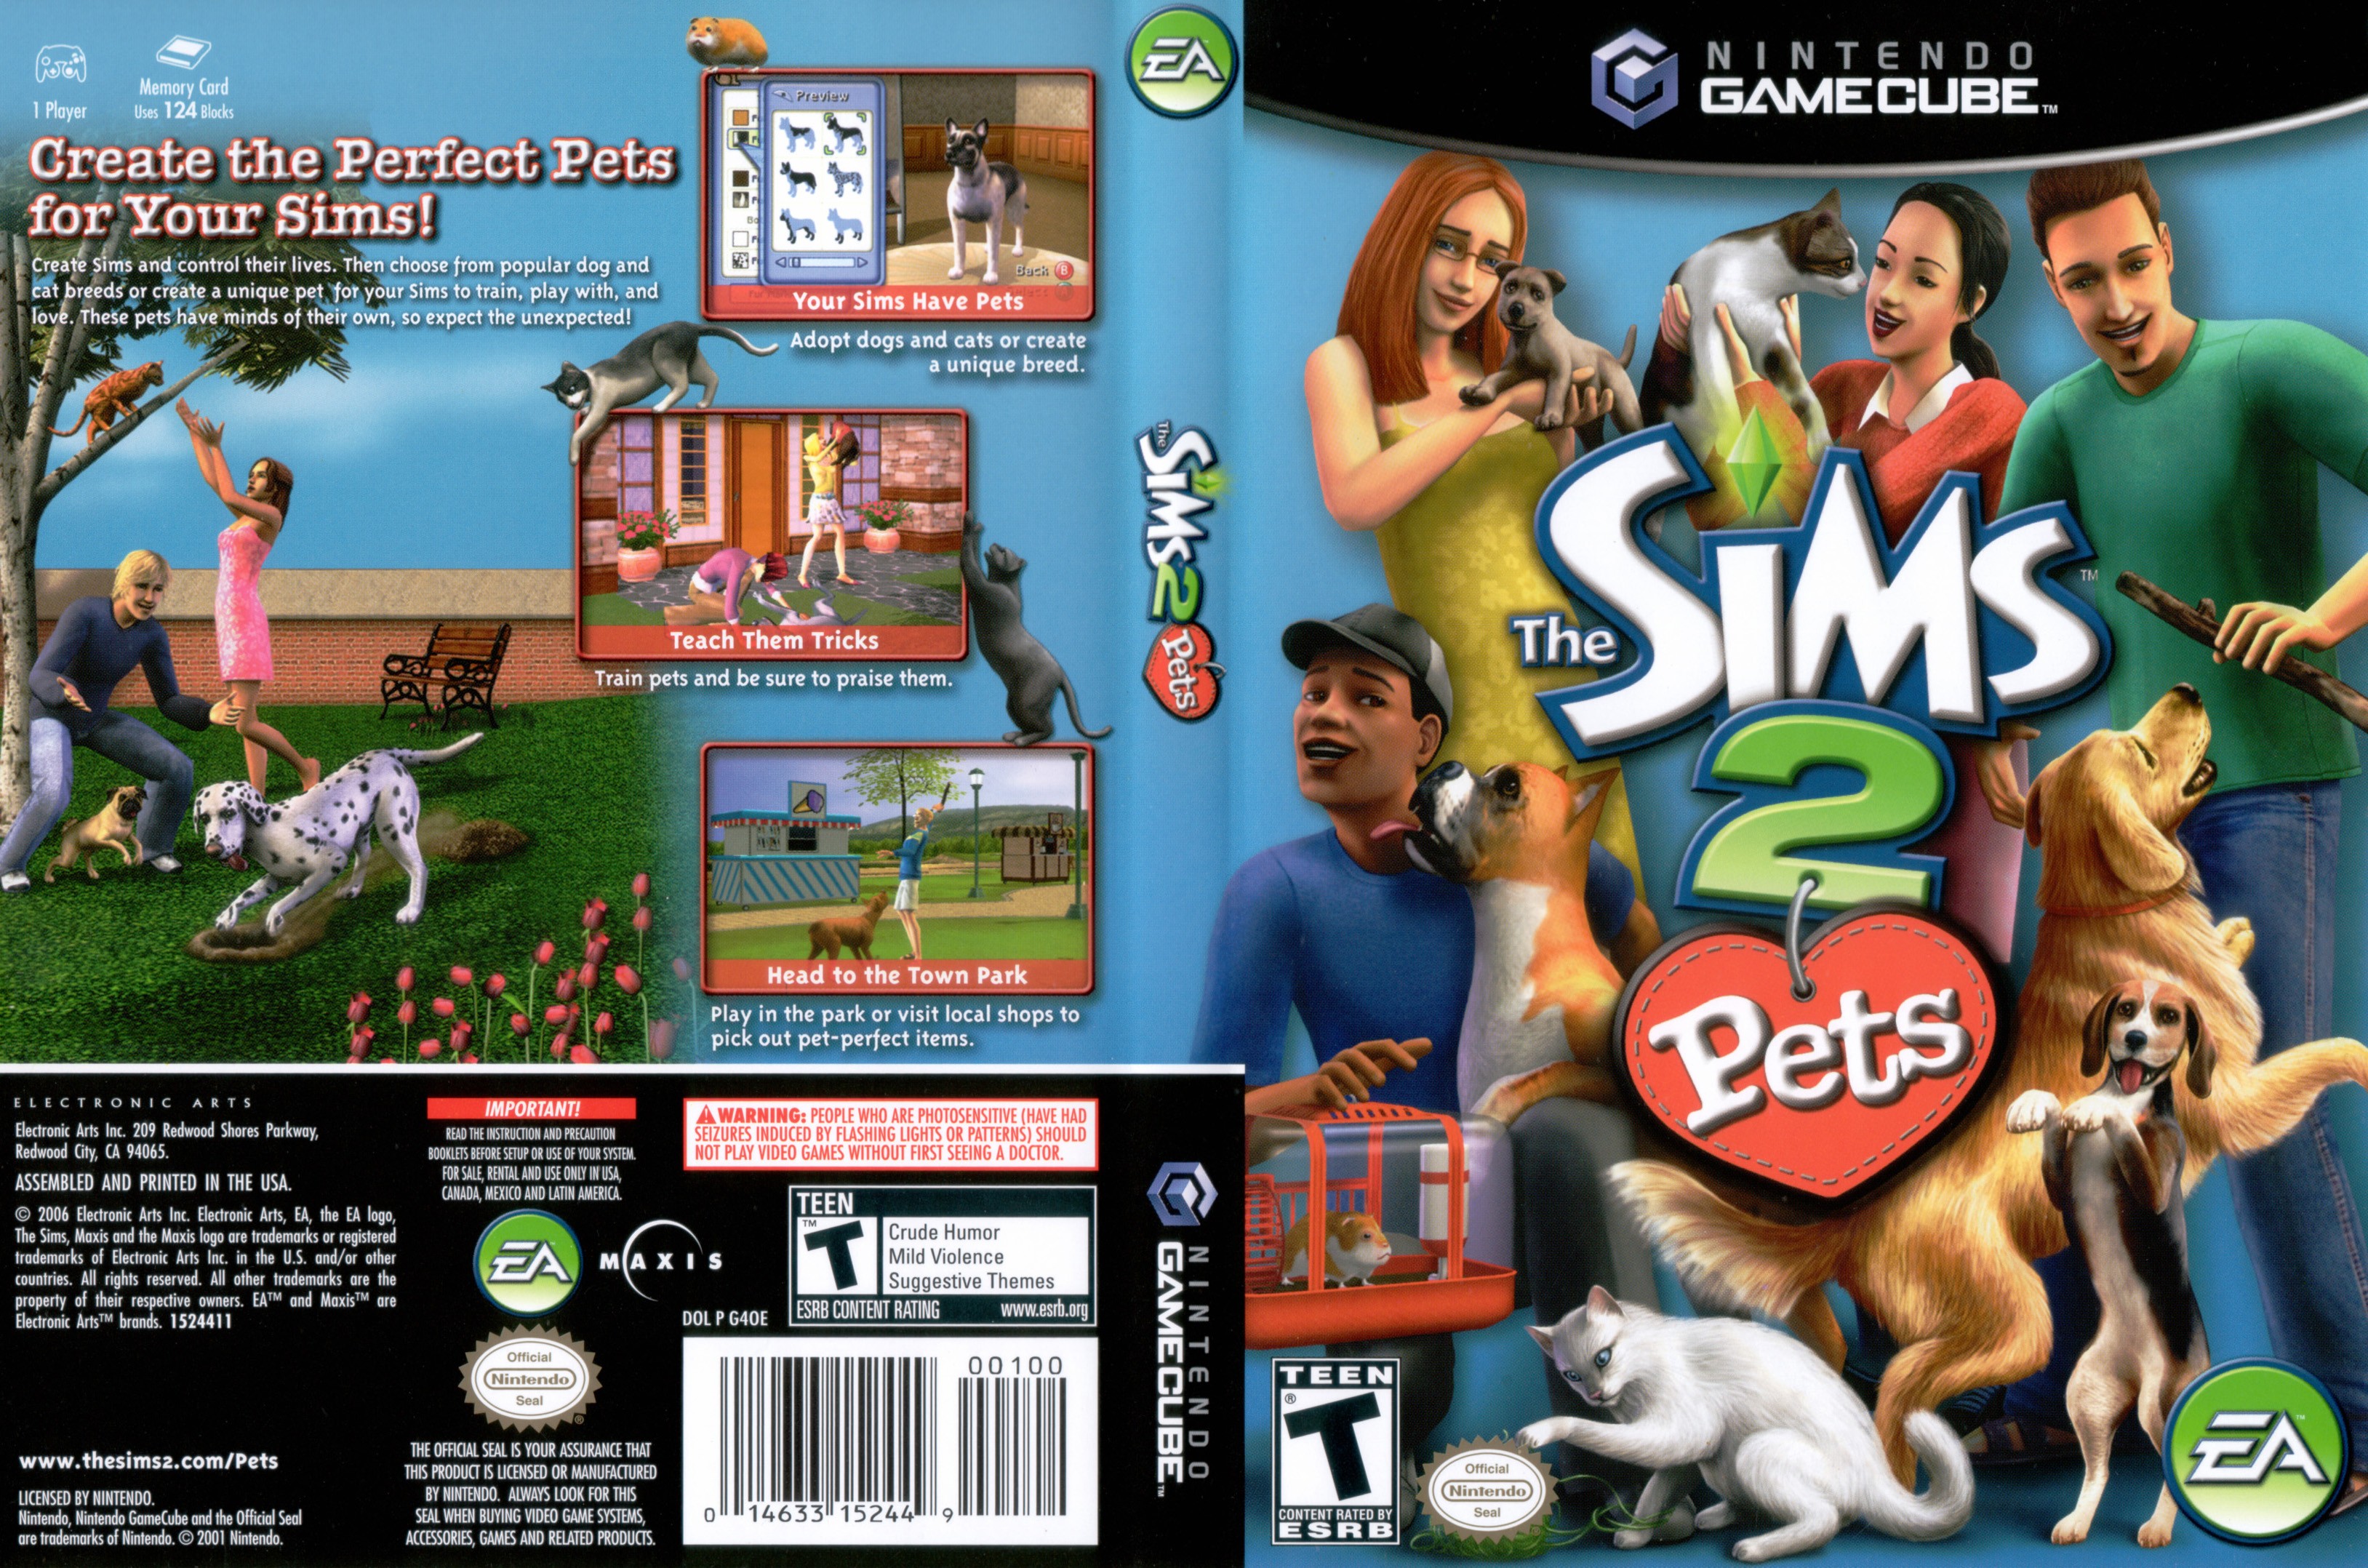 Sims 2 the nintendo gamecube rom